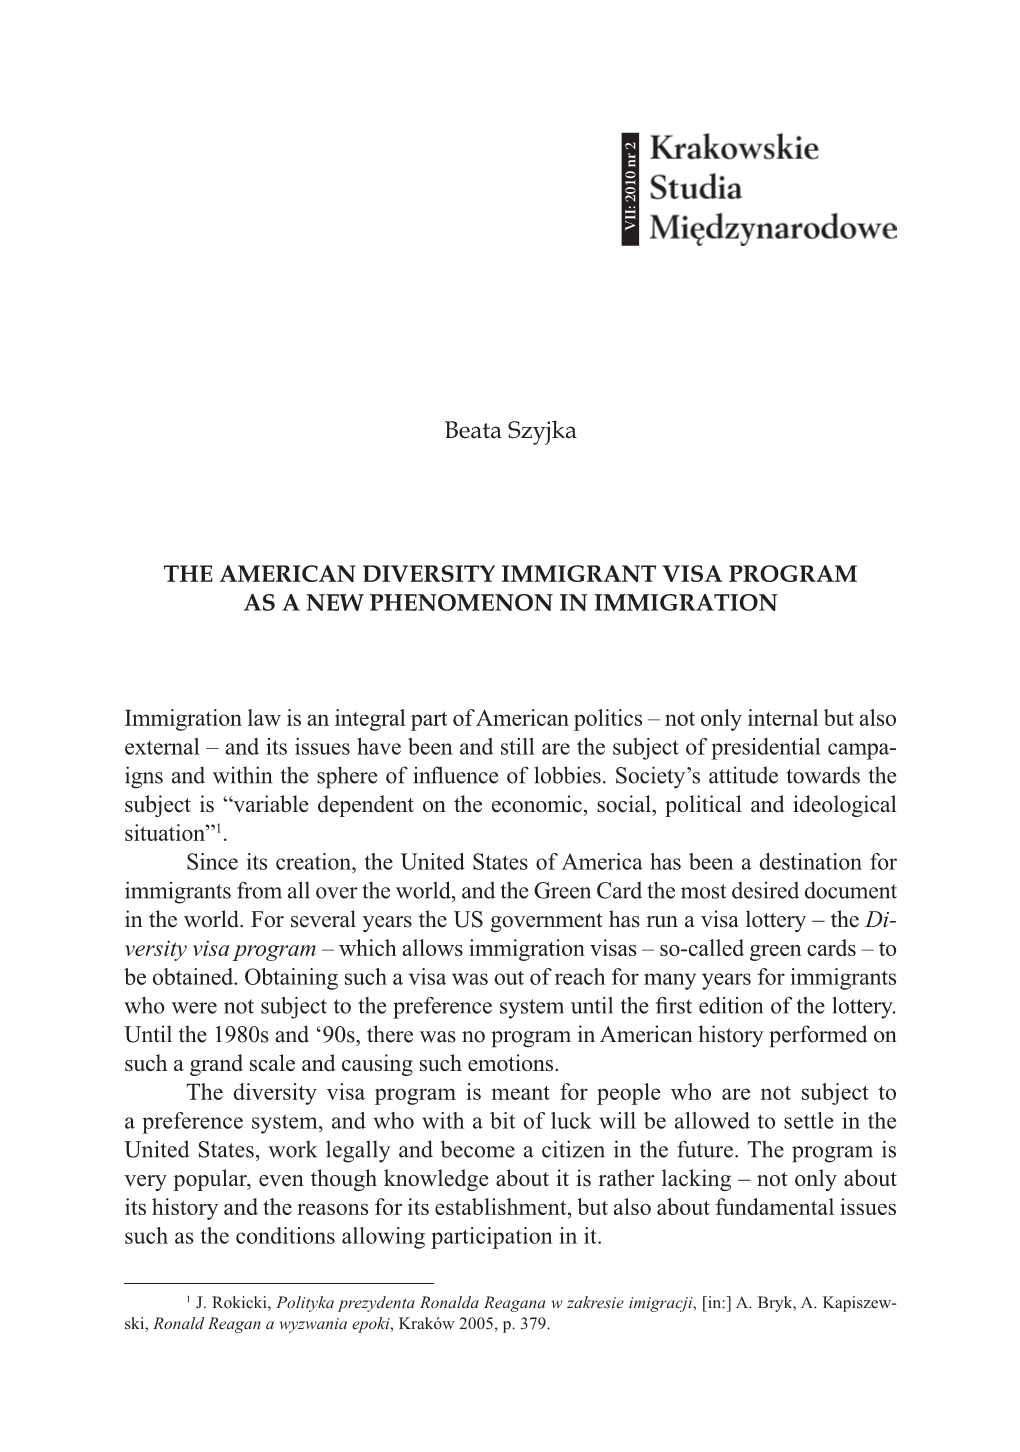 The American Diversity Immigrant Visa Program As a New Phenomenon in Immigration